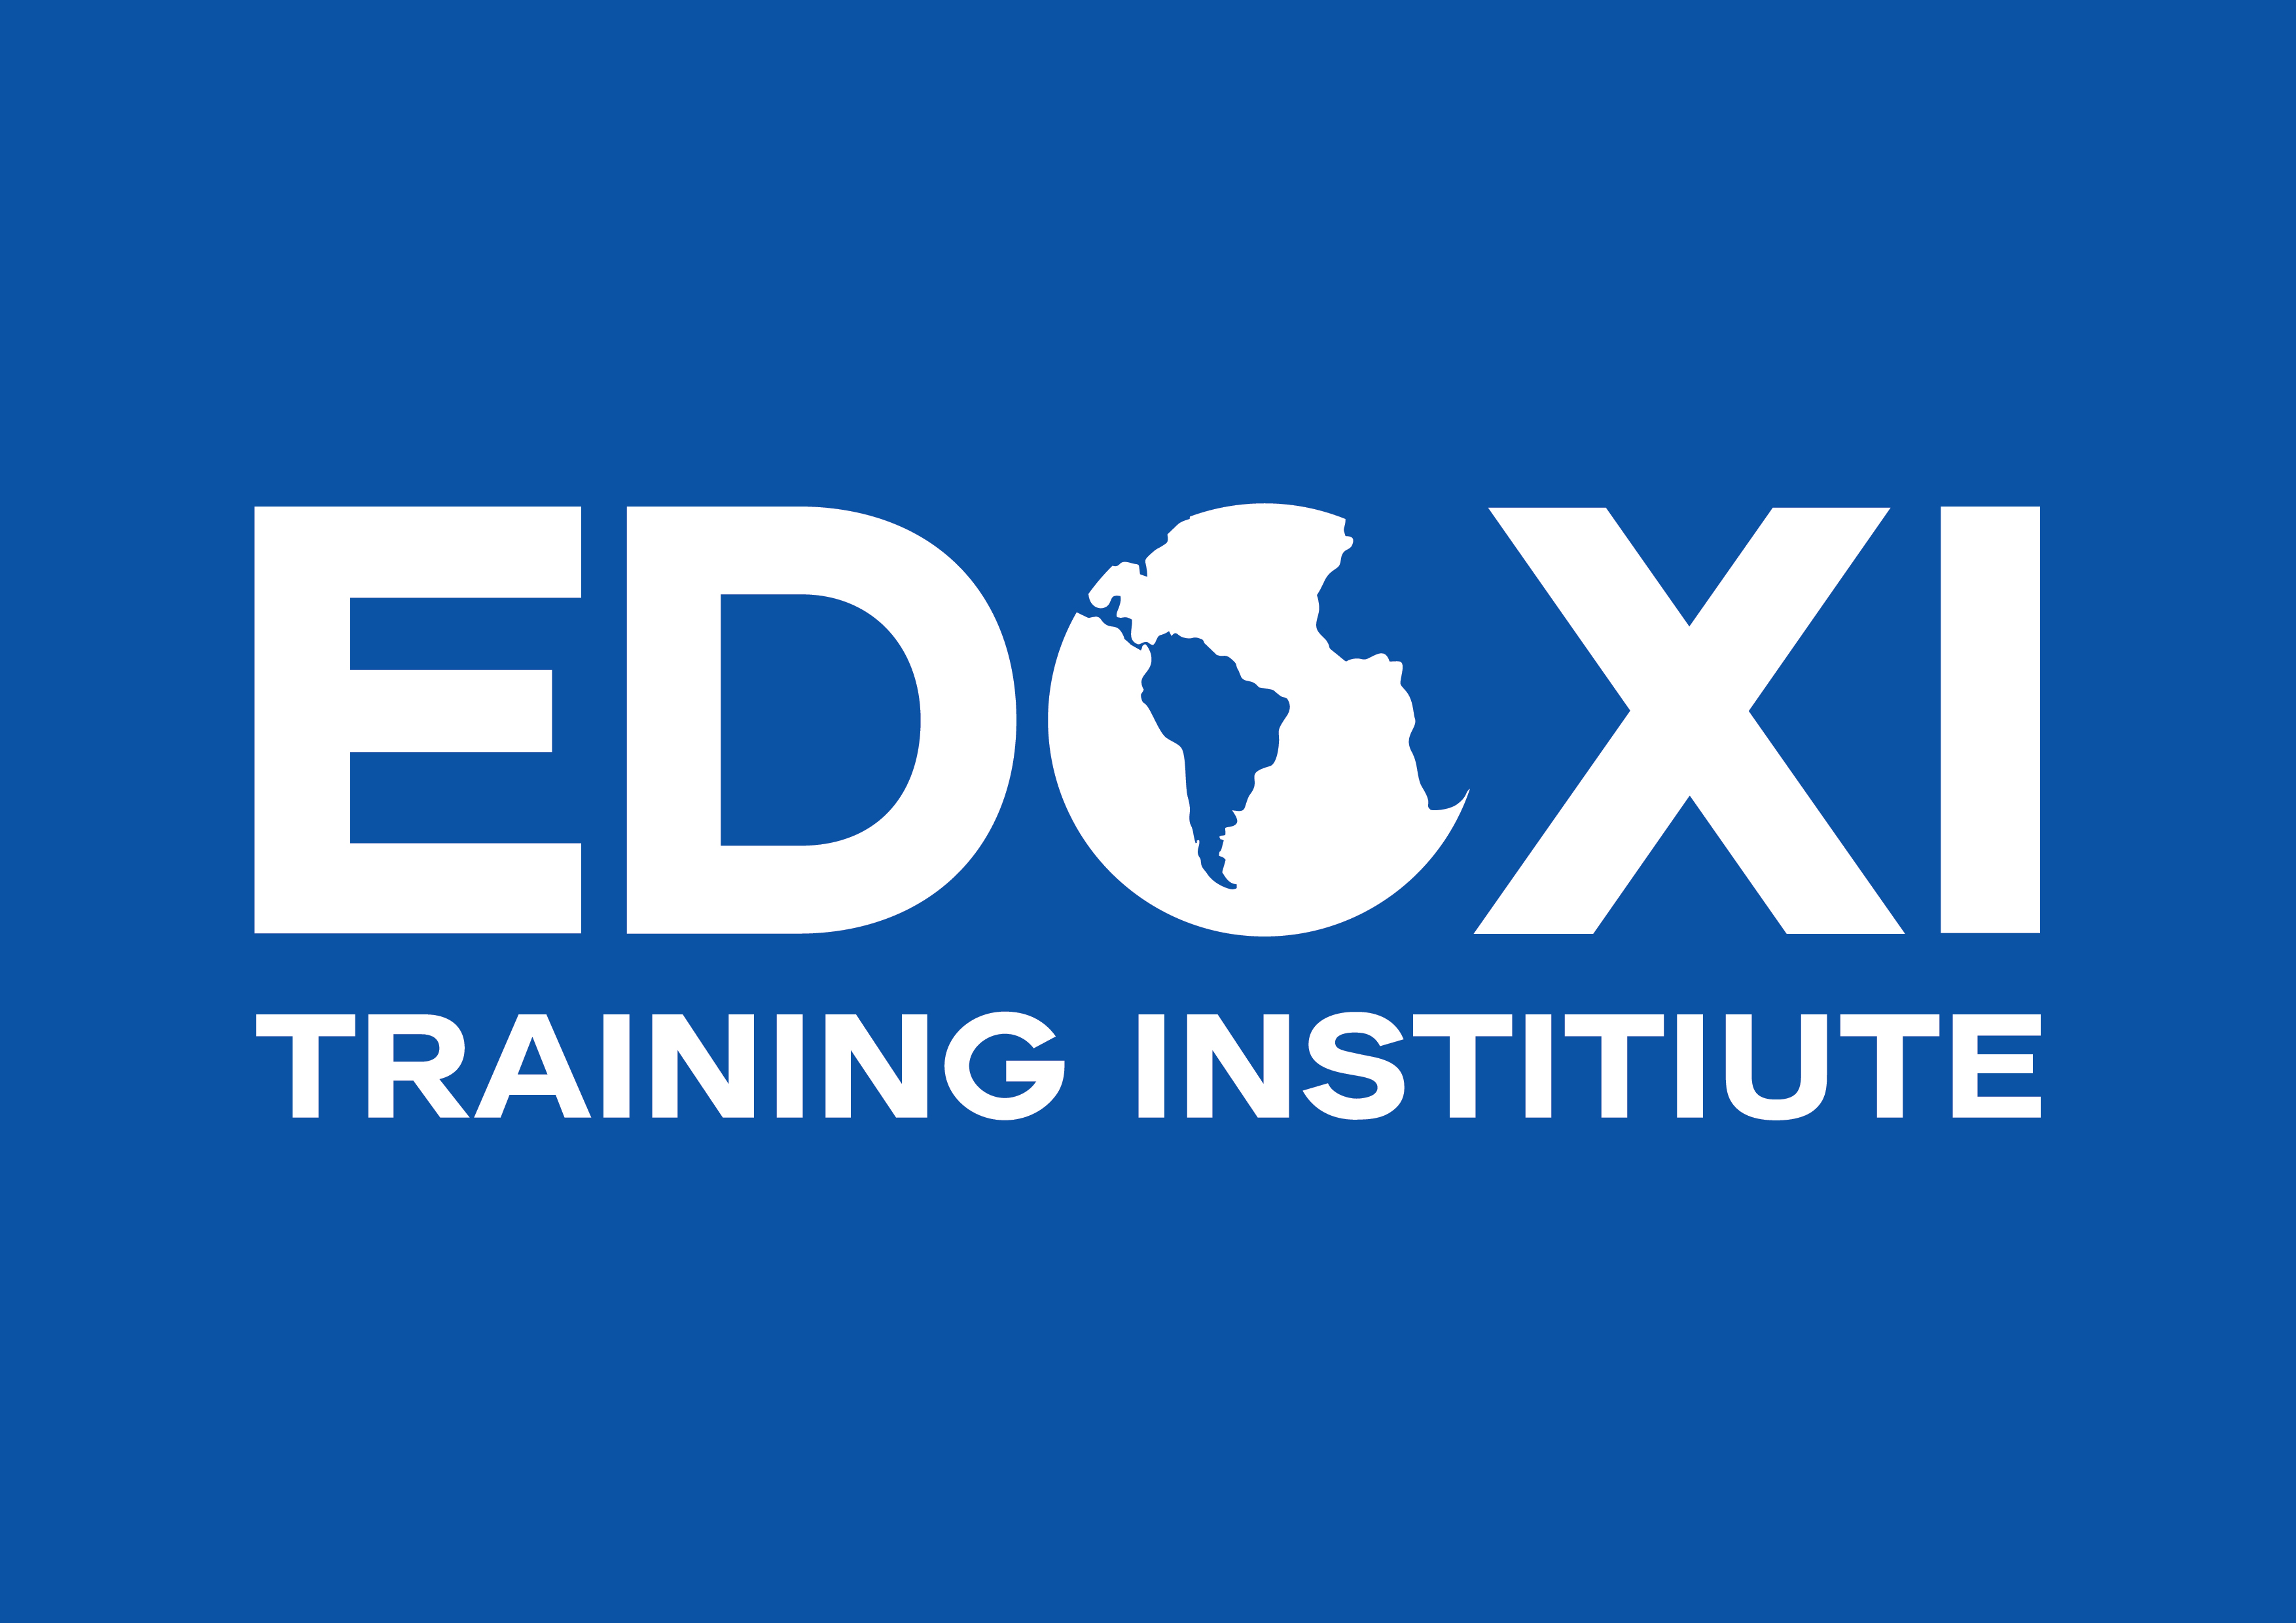 Edoxi Training Institute Logo